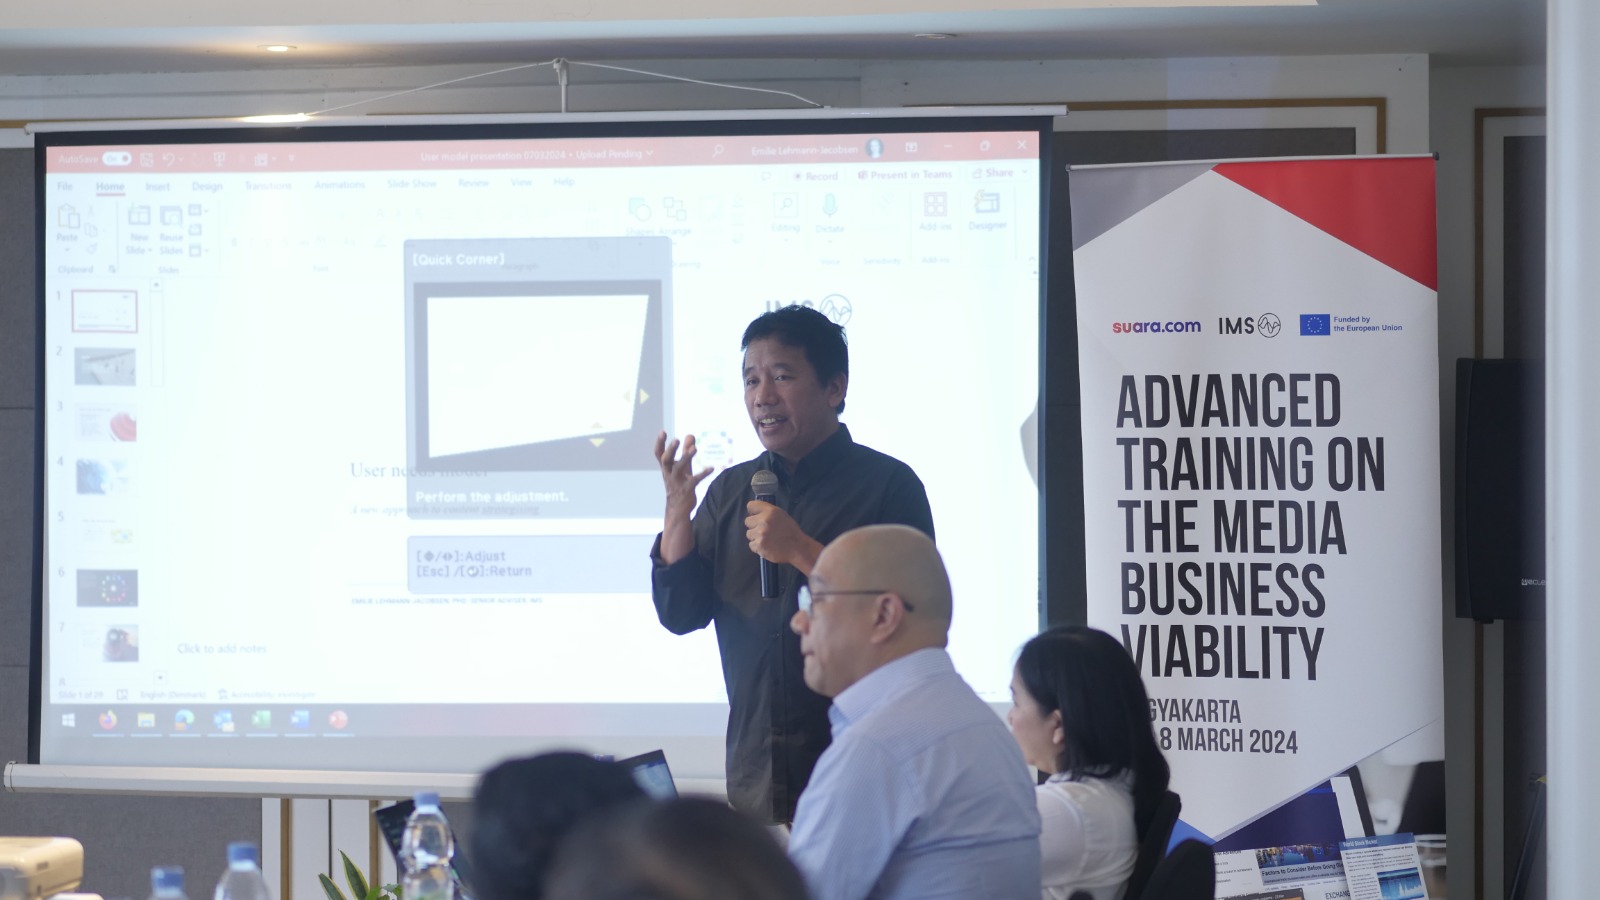 Pemimpin Redaksi Suara.com Suwarjono juga menggarisbawahi pentingnya program Advance Training for The Media Business Viability bagi media-media di Indonesia.